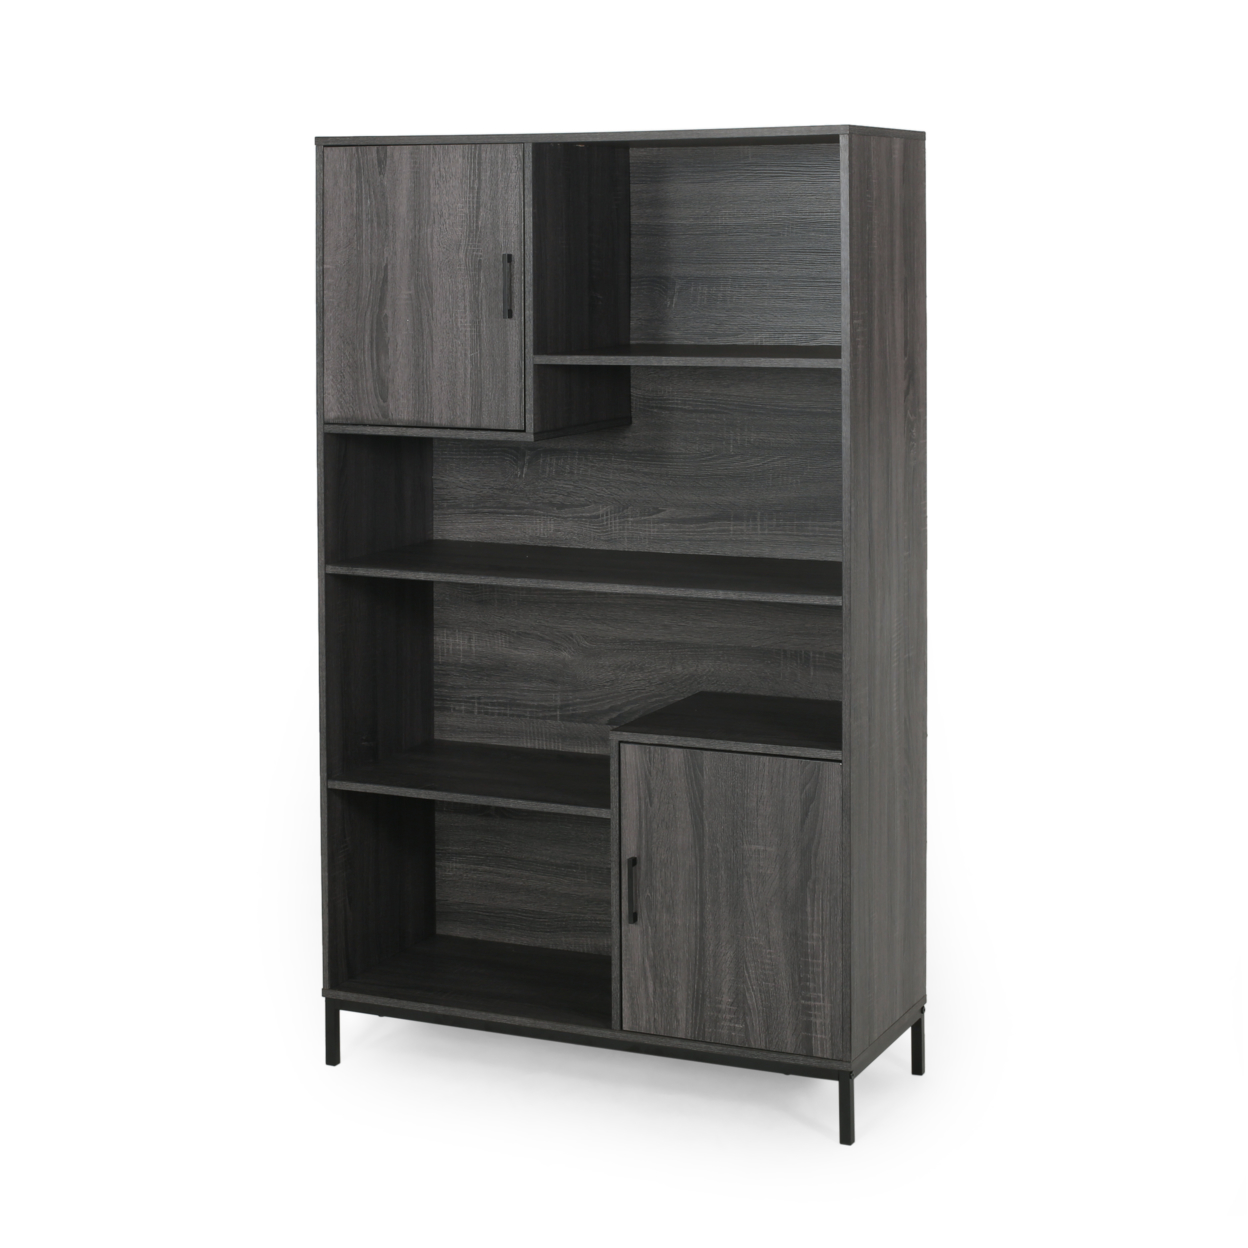 Joanne Contemporary Faux Wood Cube Unit Bookcase - Dark Gray + Black